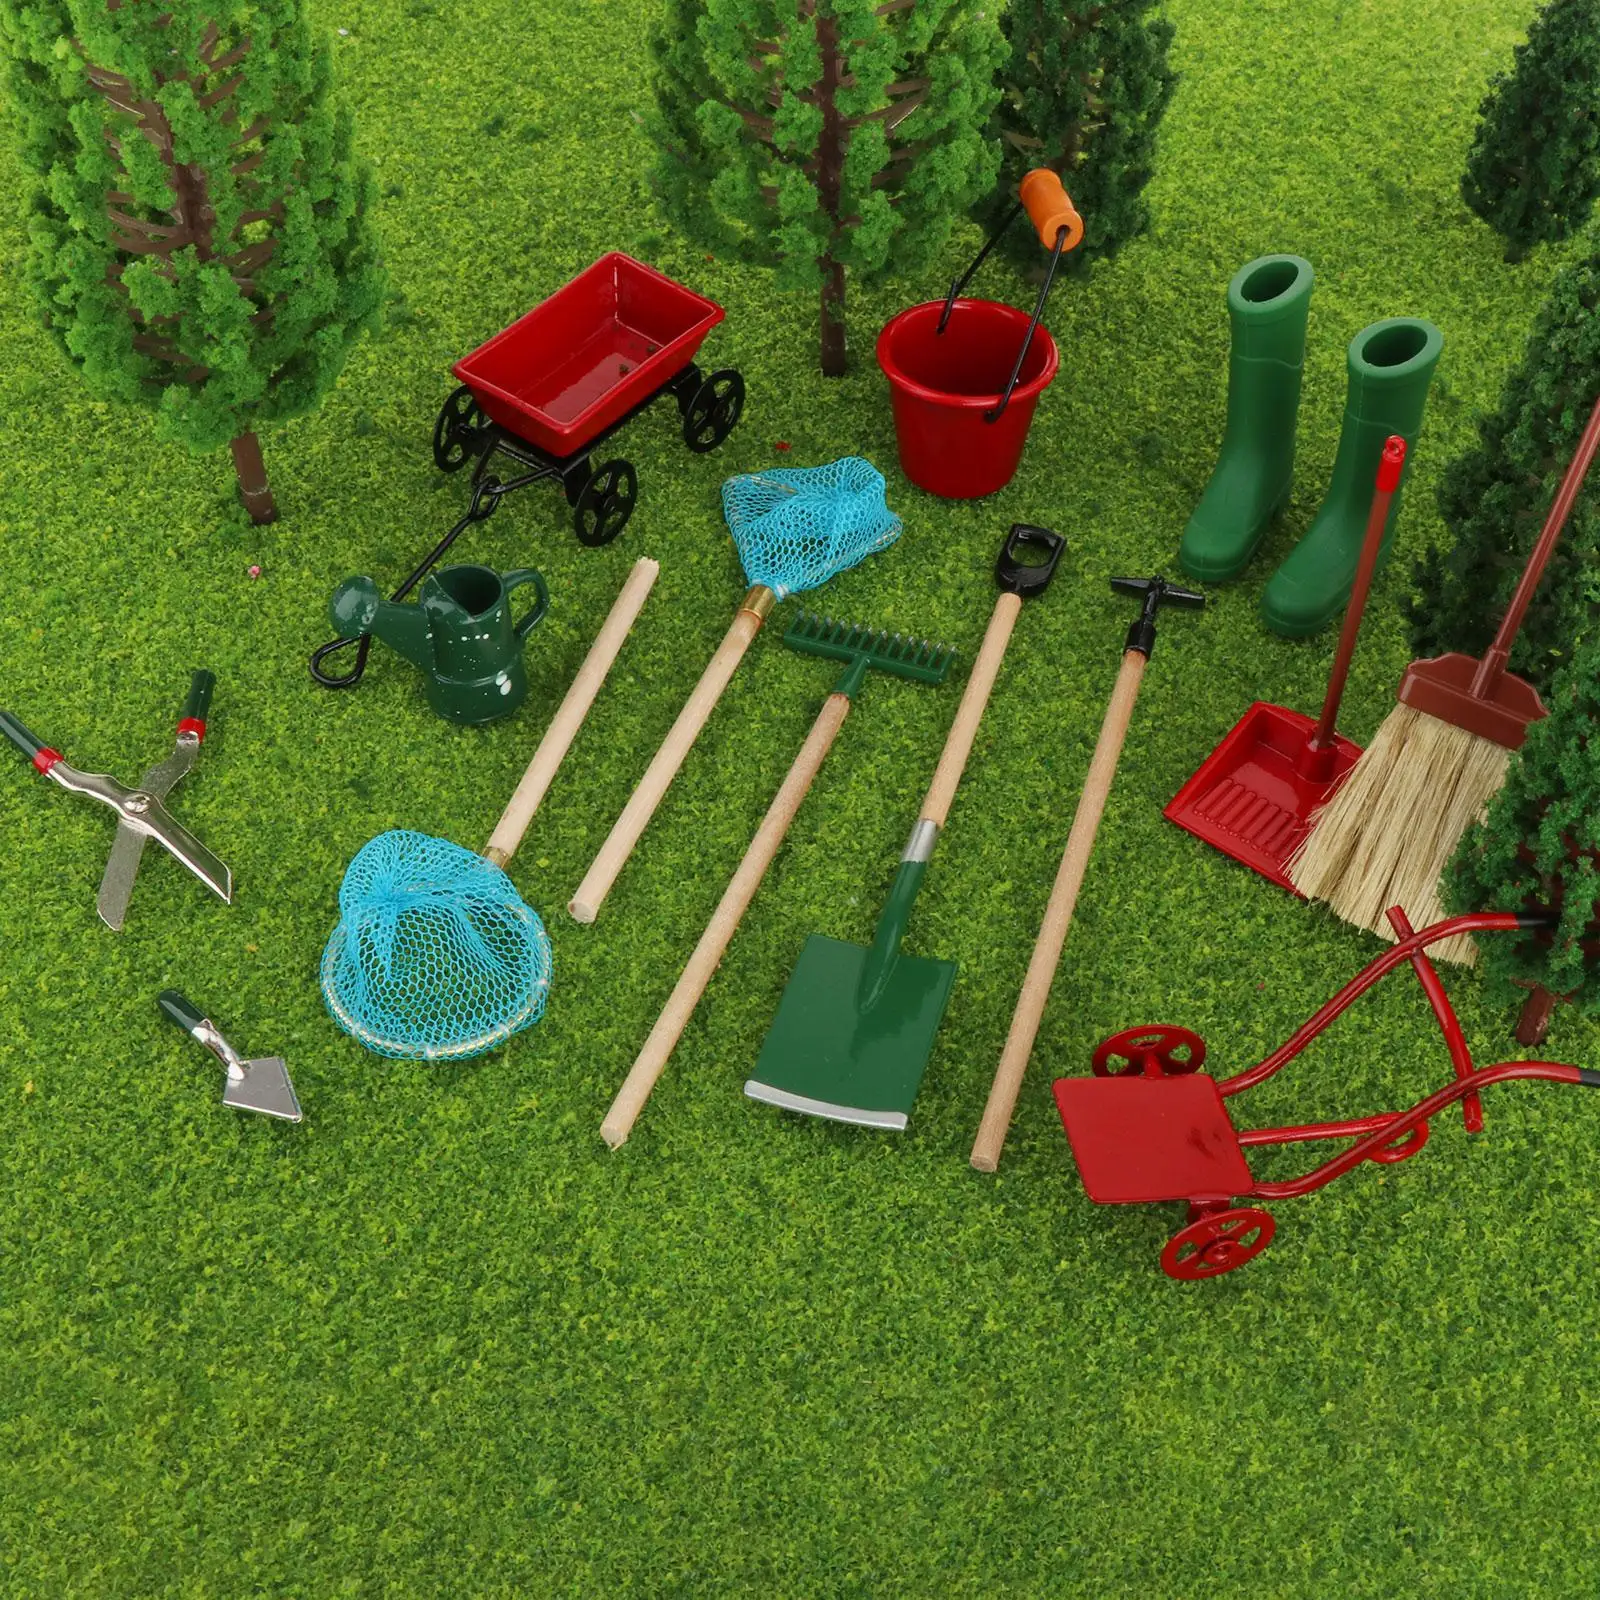 14x 1:12 Simulation Gardening Tools, Kids Cleaning Toys Mini Ornament Garden Furniture Miniature Tool Miniature Garden Tools,